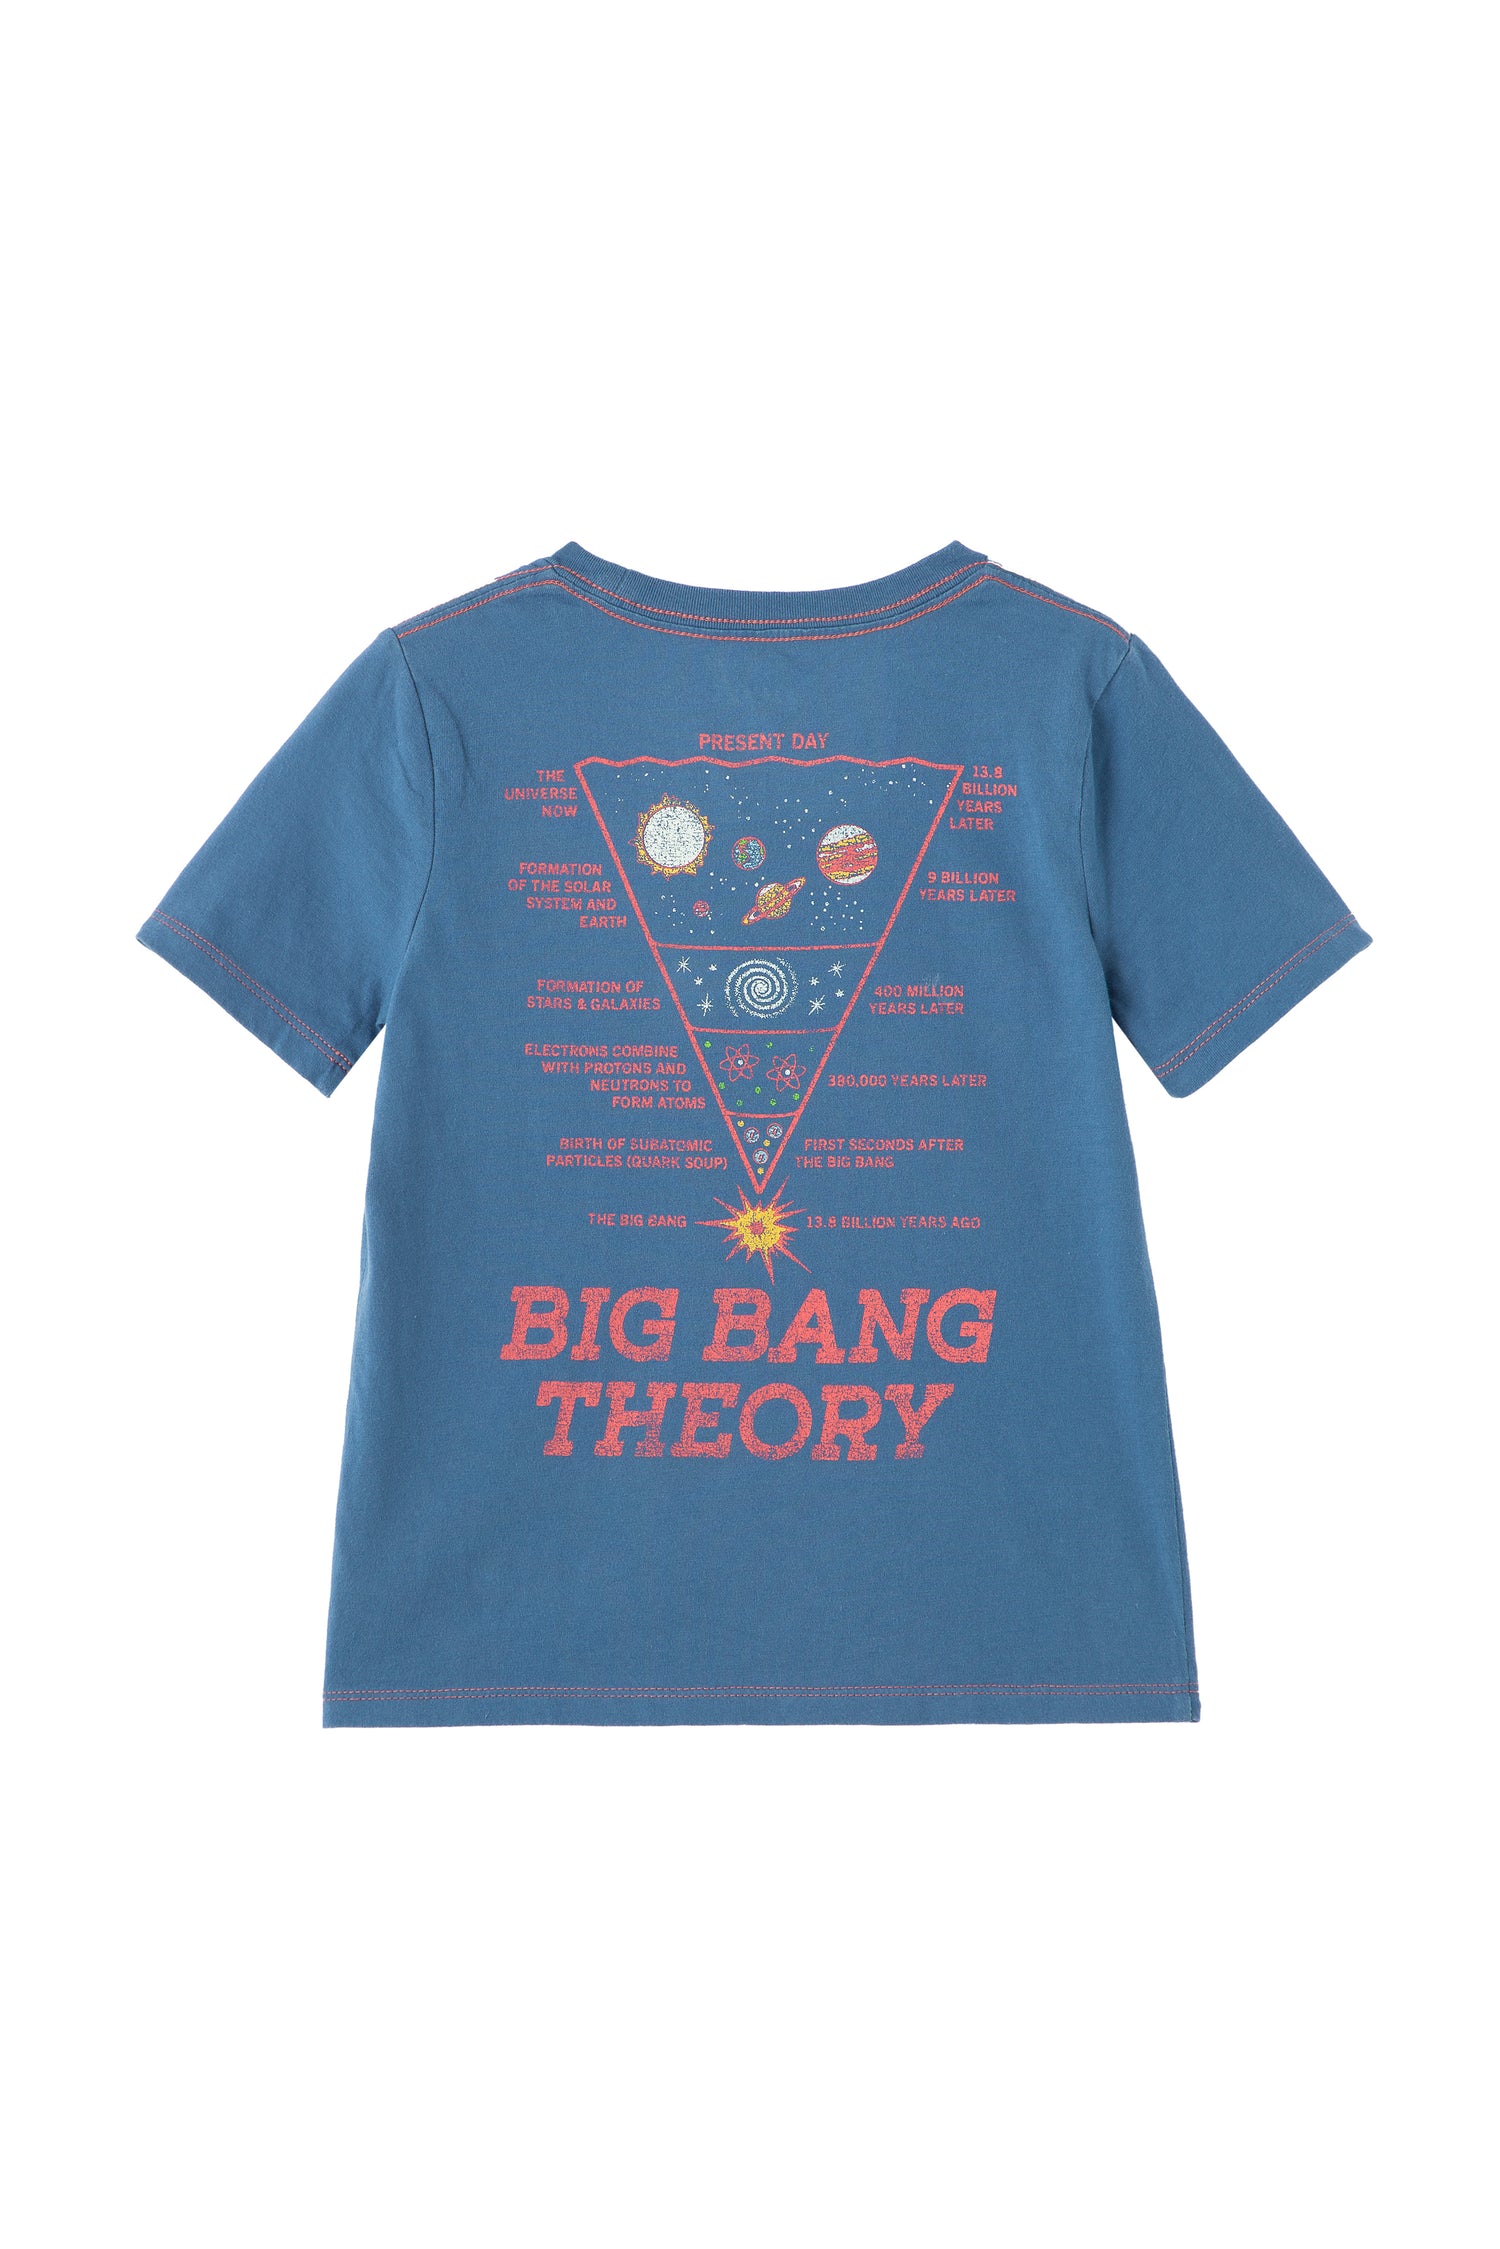 Back of blue t-shirt with big bang theory inverted pyramid diagram and text